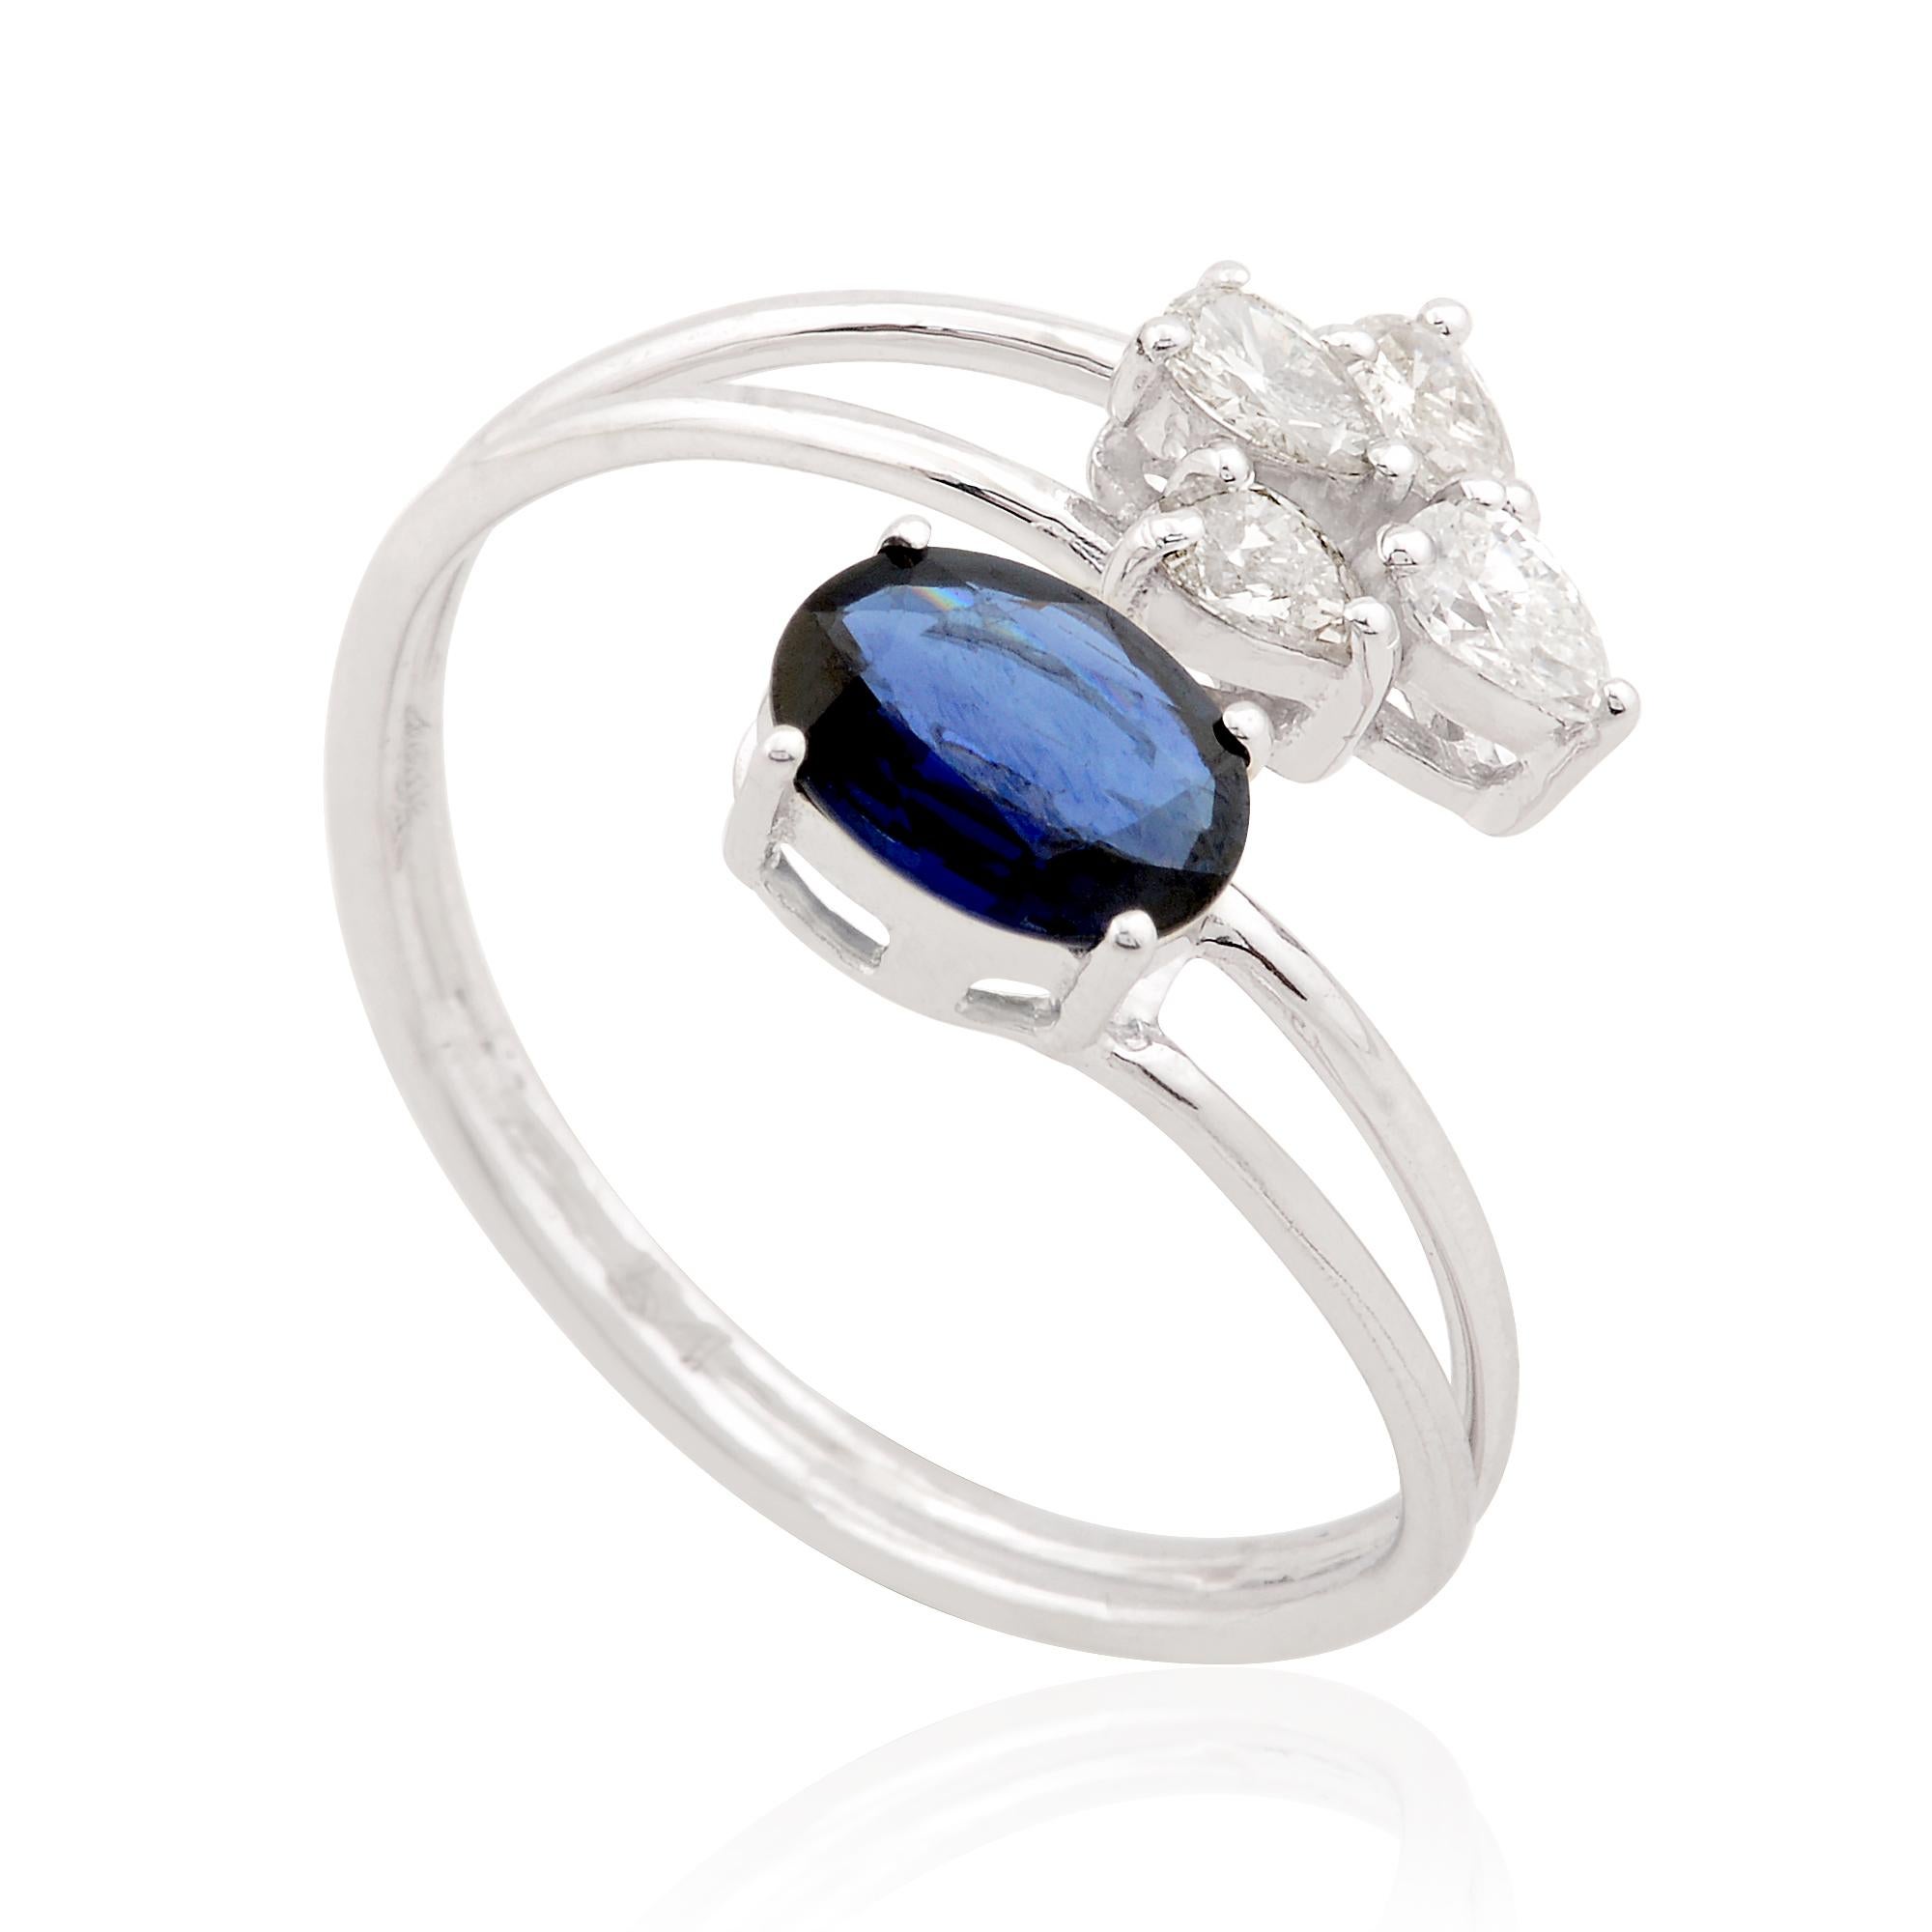 Oval Cut Blue Sapphire Gemstone Ring Pear Diamond 10 Karat White Gold Jewelry For Sale